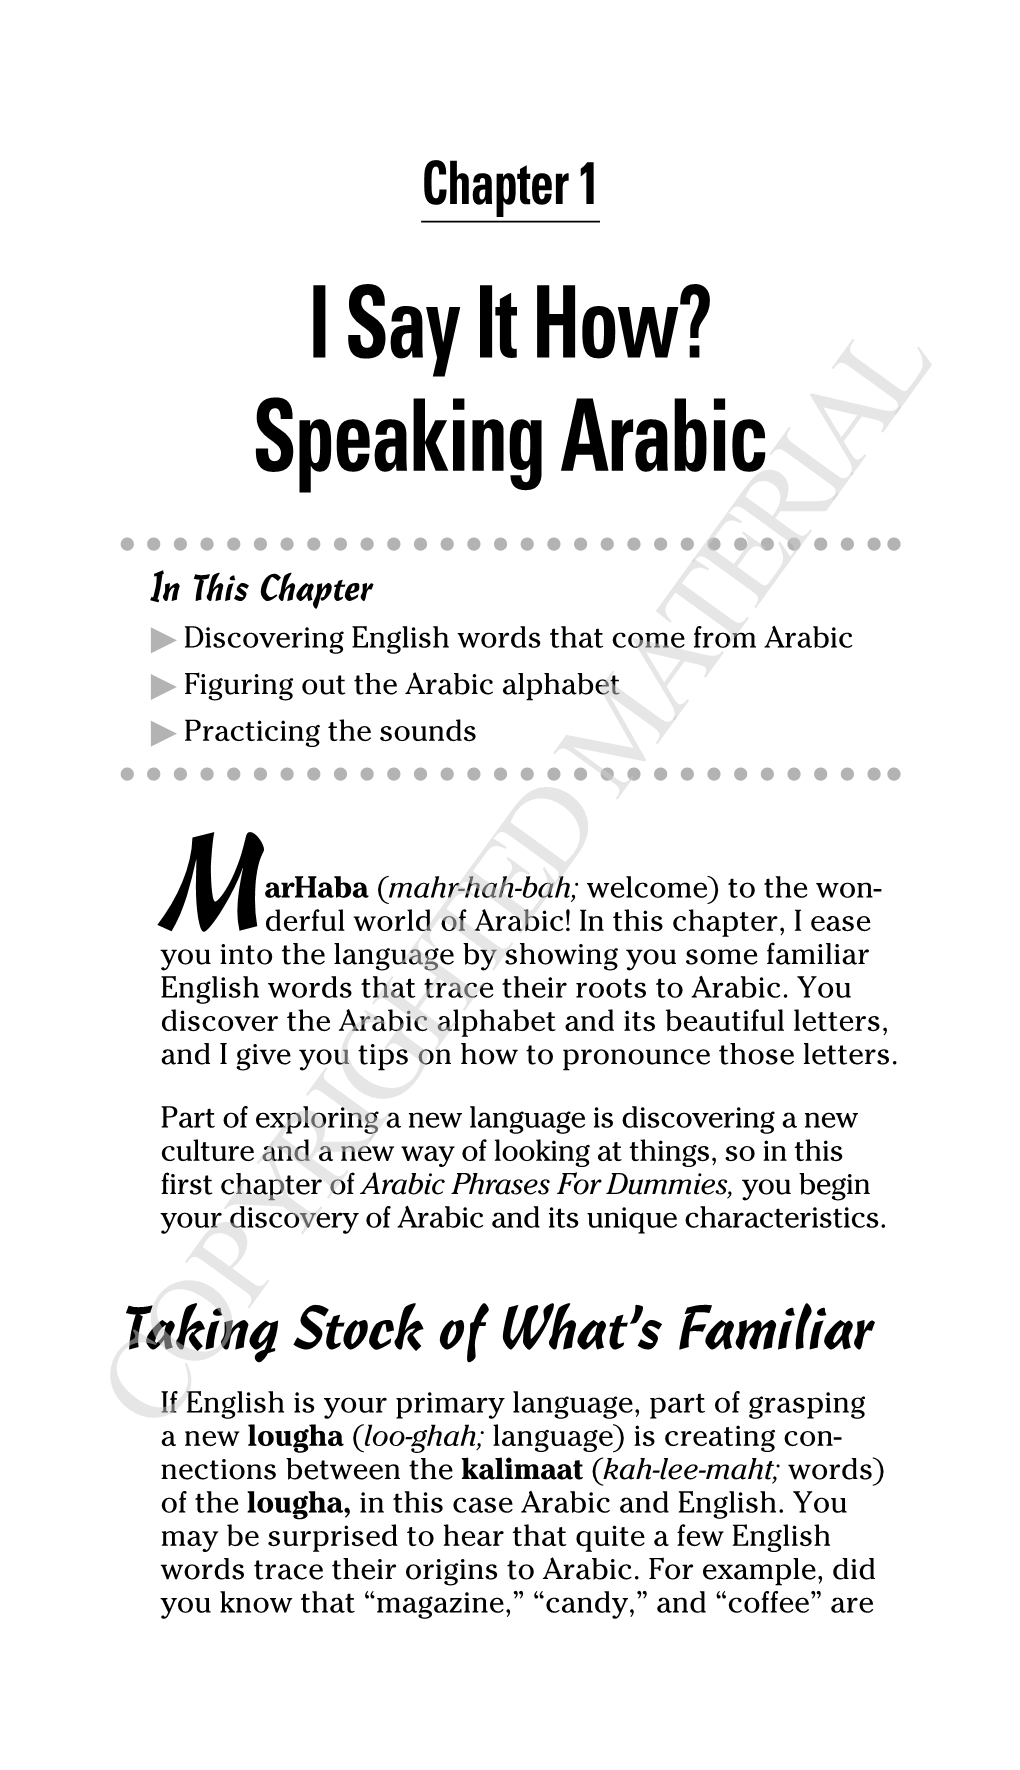 Speaking Arabic